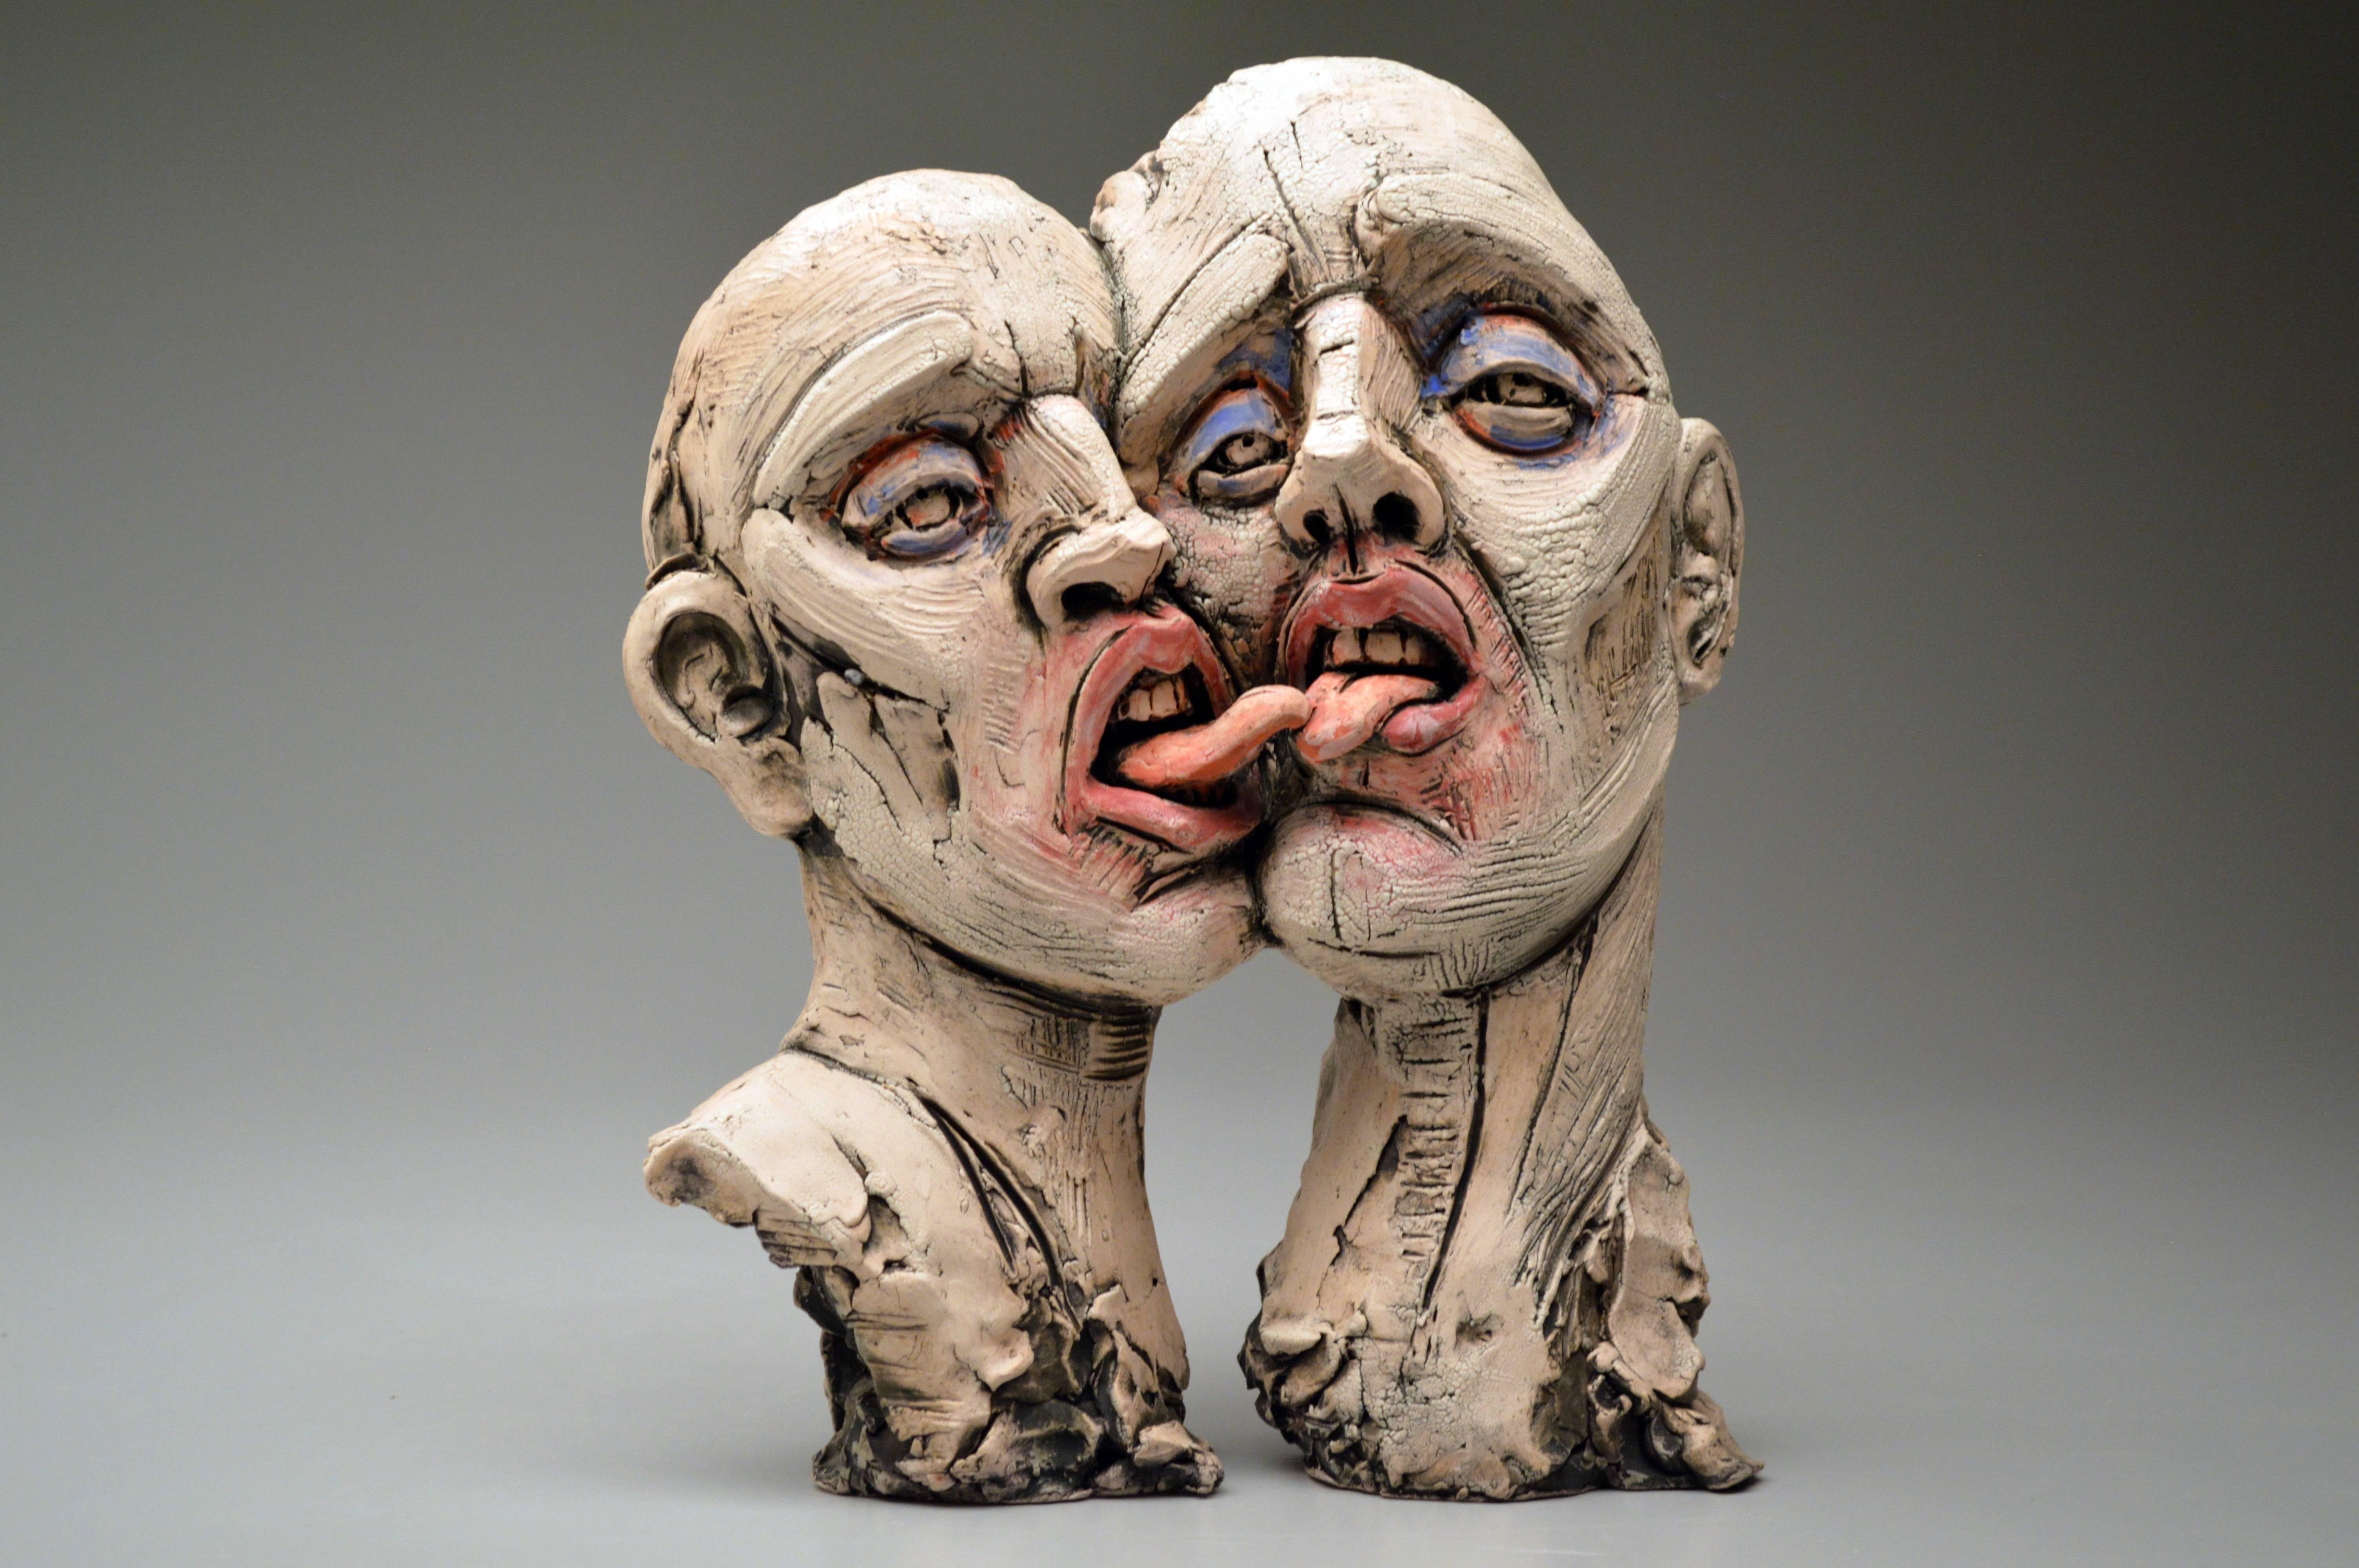 Chris Riccardo Abstract Sculpture - "Bald", Stoneware Sculpture with Glaze and Underglaze